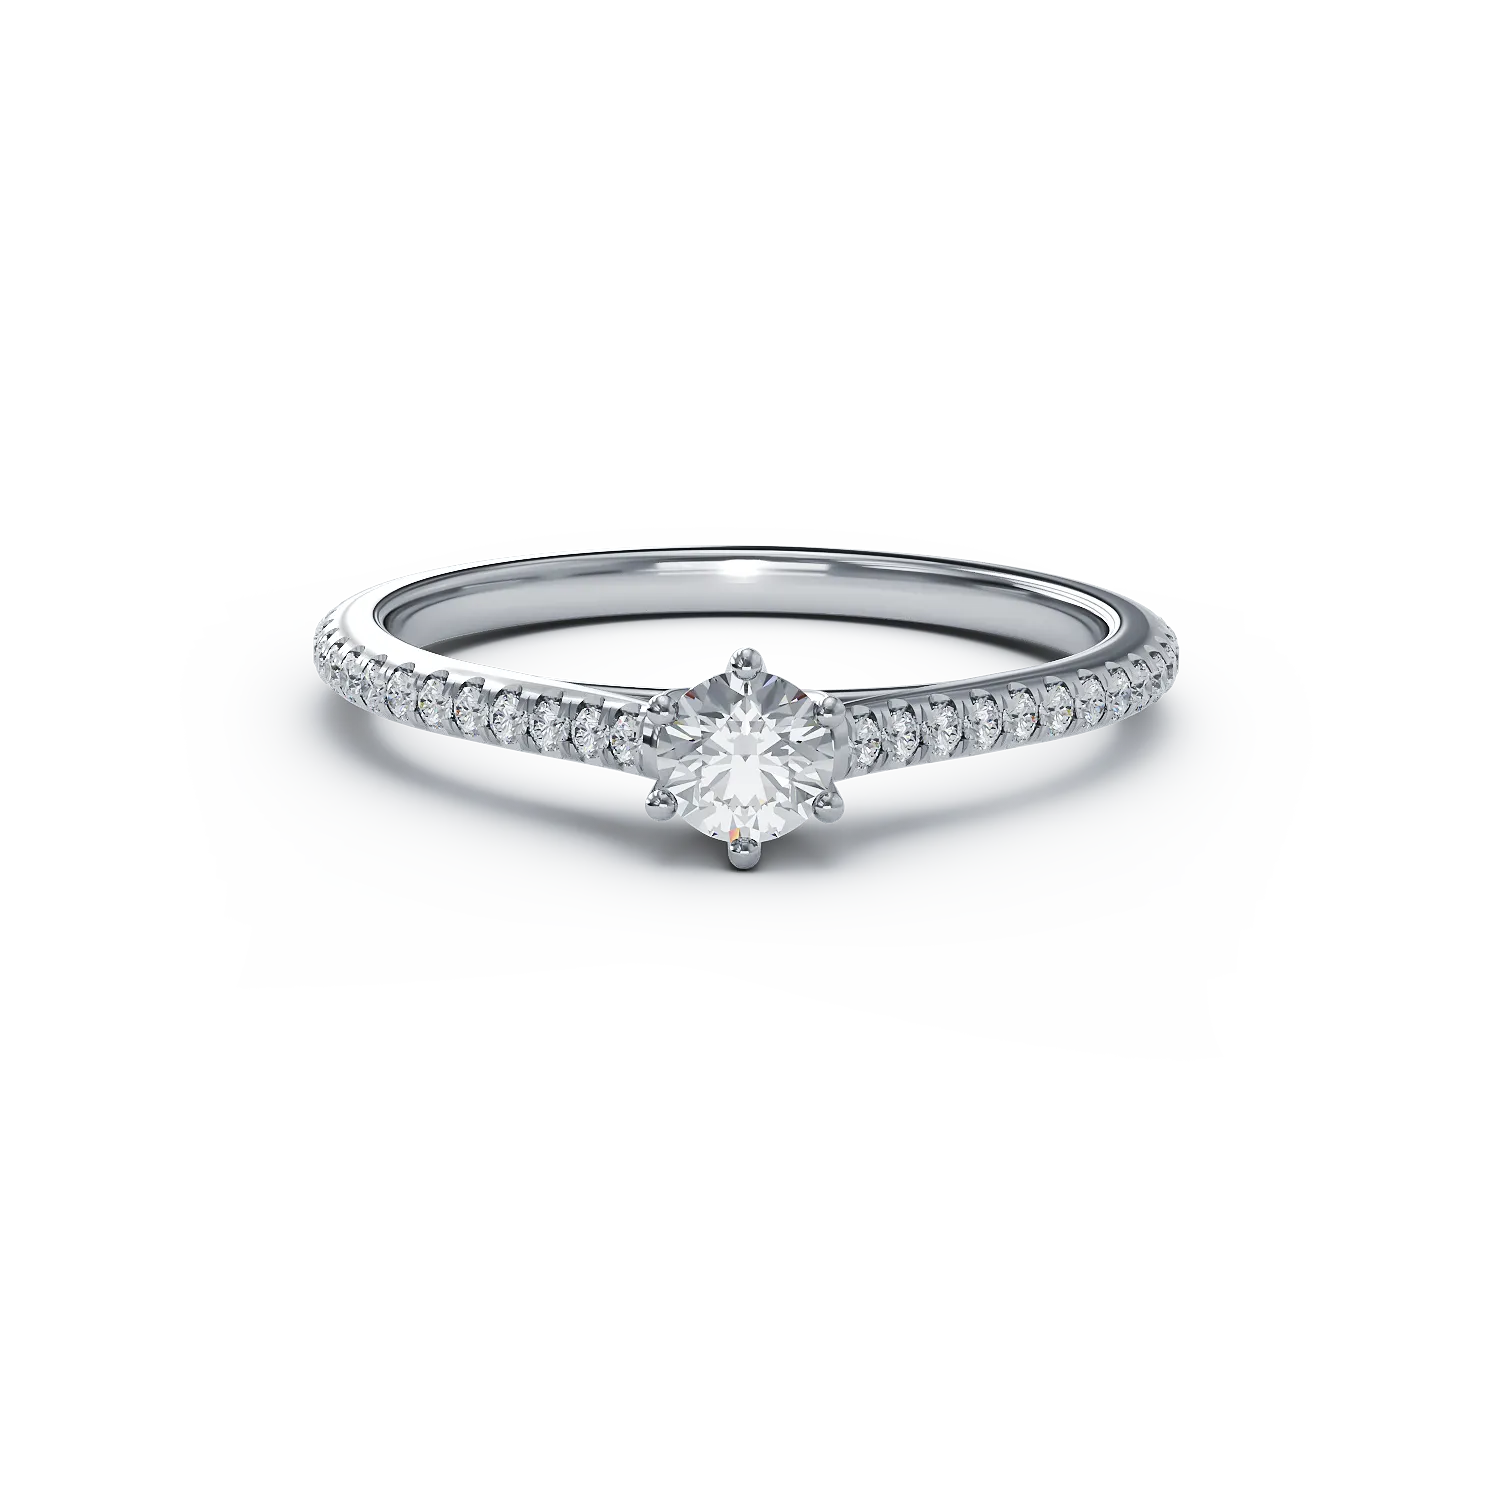 Platinum engagement ring with 0.2ct diamond and 0.167ct diamonds